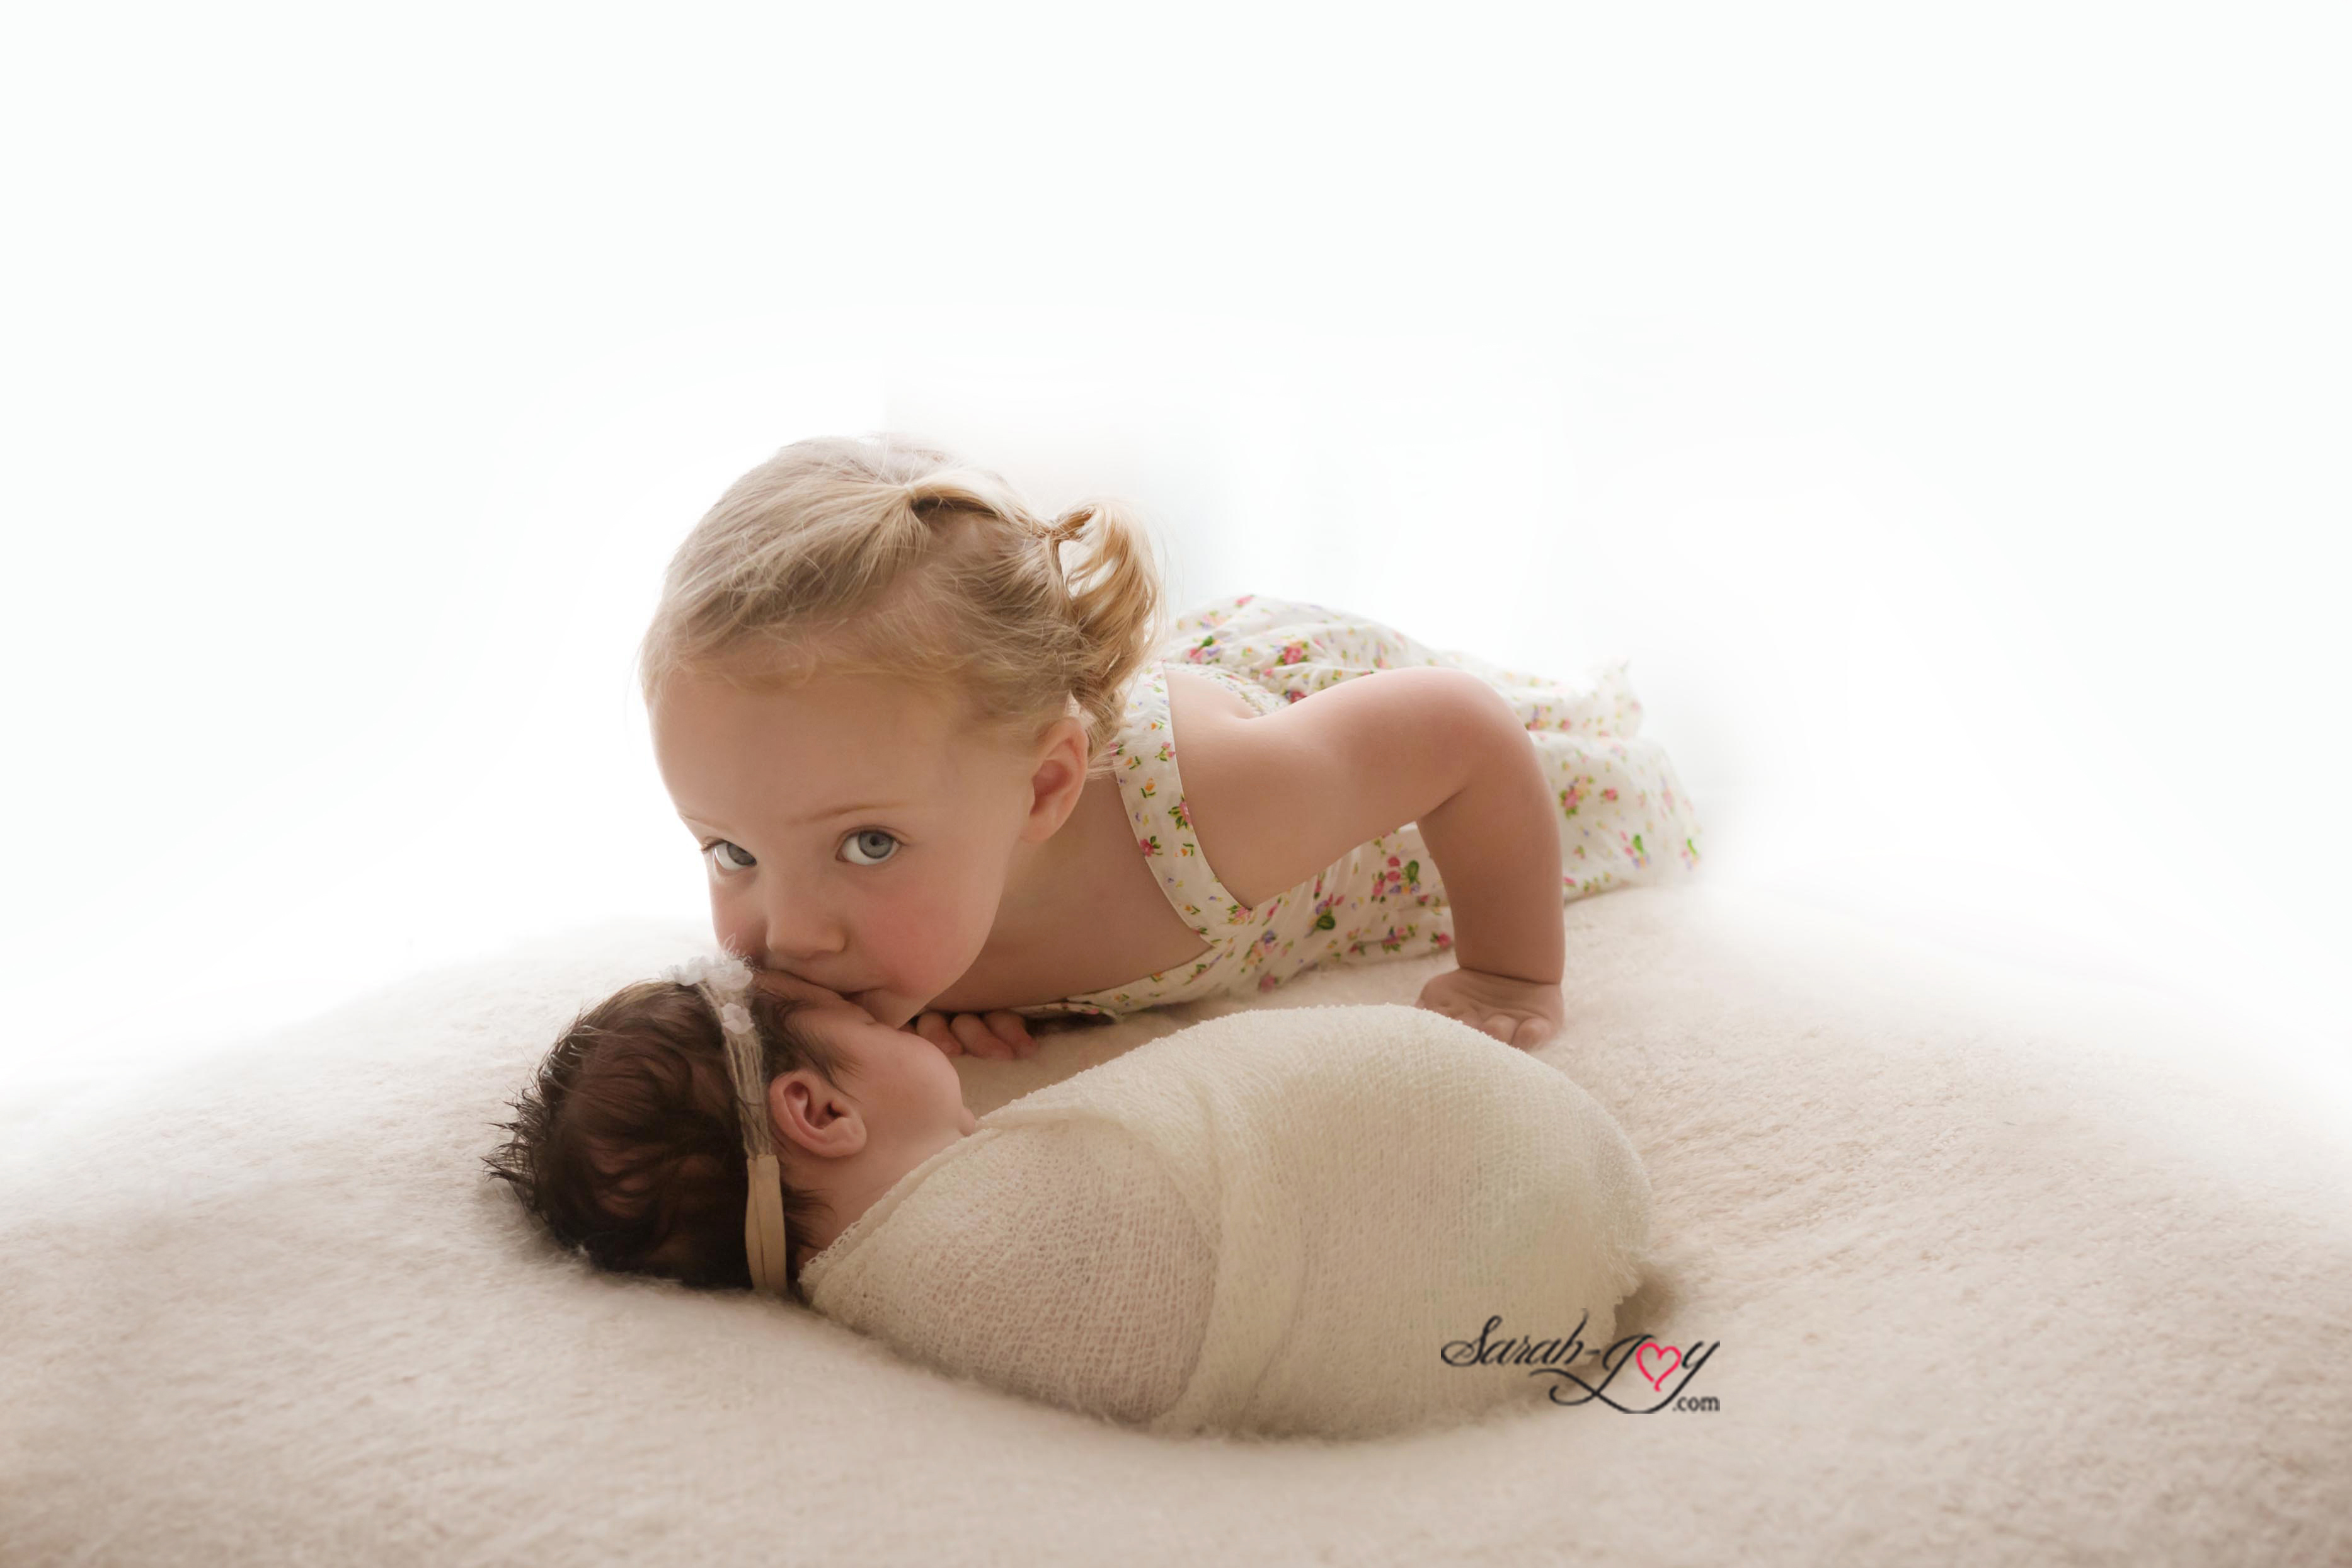 Photography by Sarah Joy - Yarra Valley Newborn Baby & Family Photographer